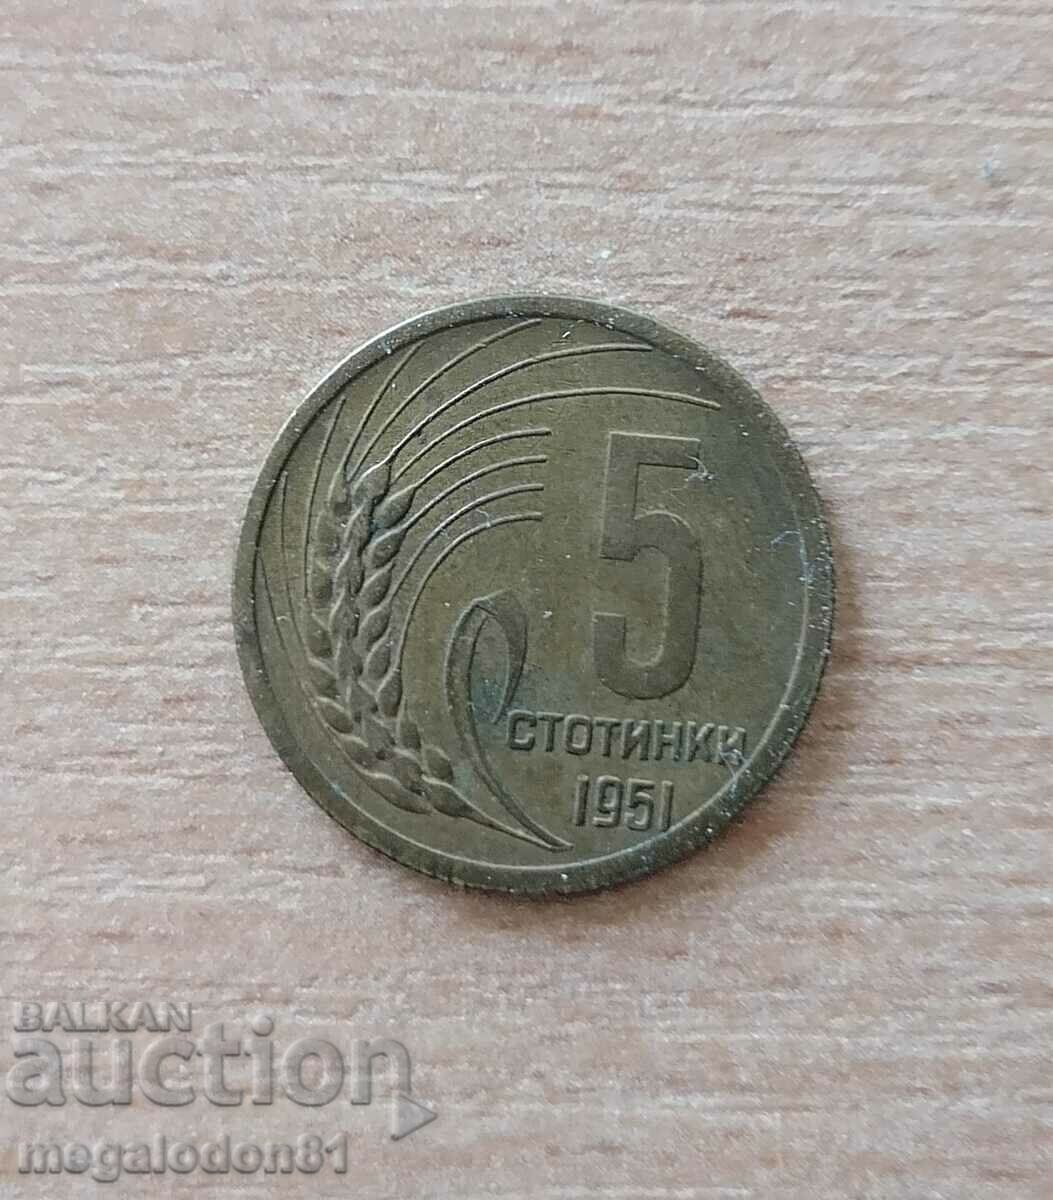 Bulgaria - 5 cents 1951